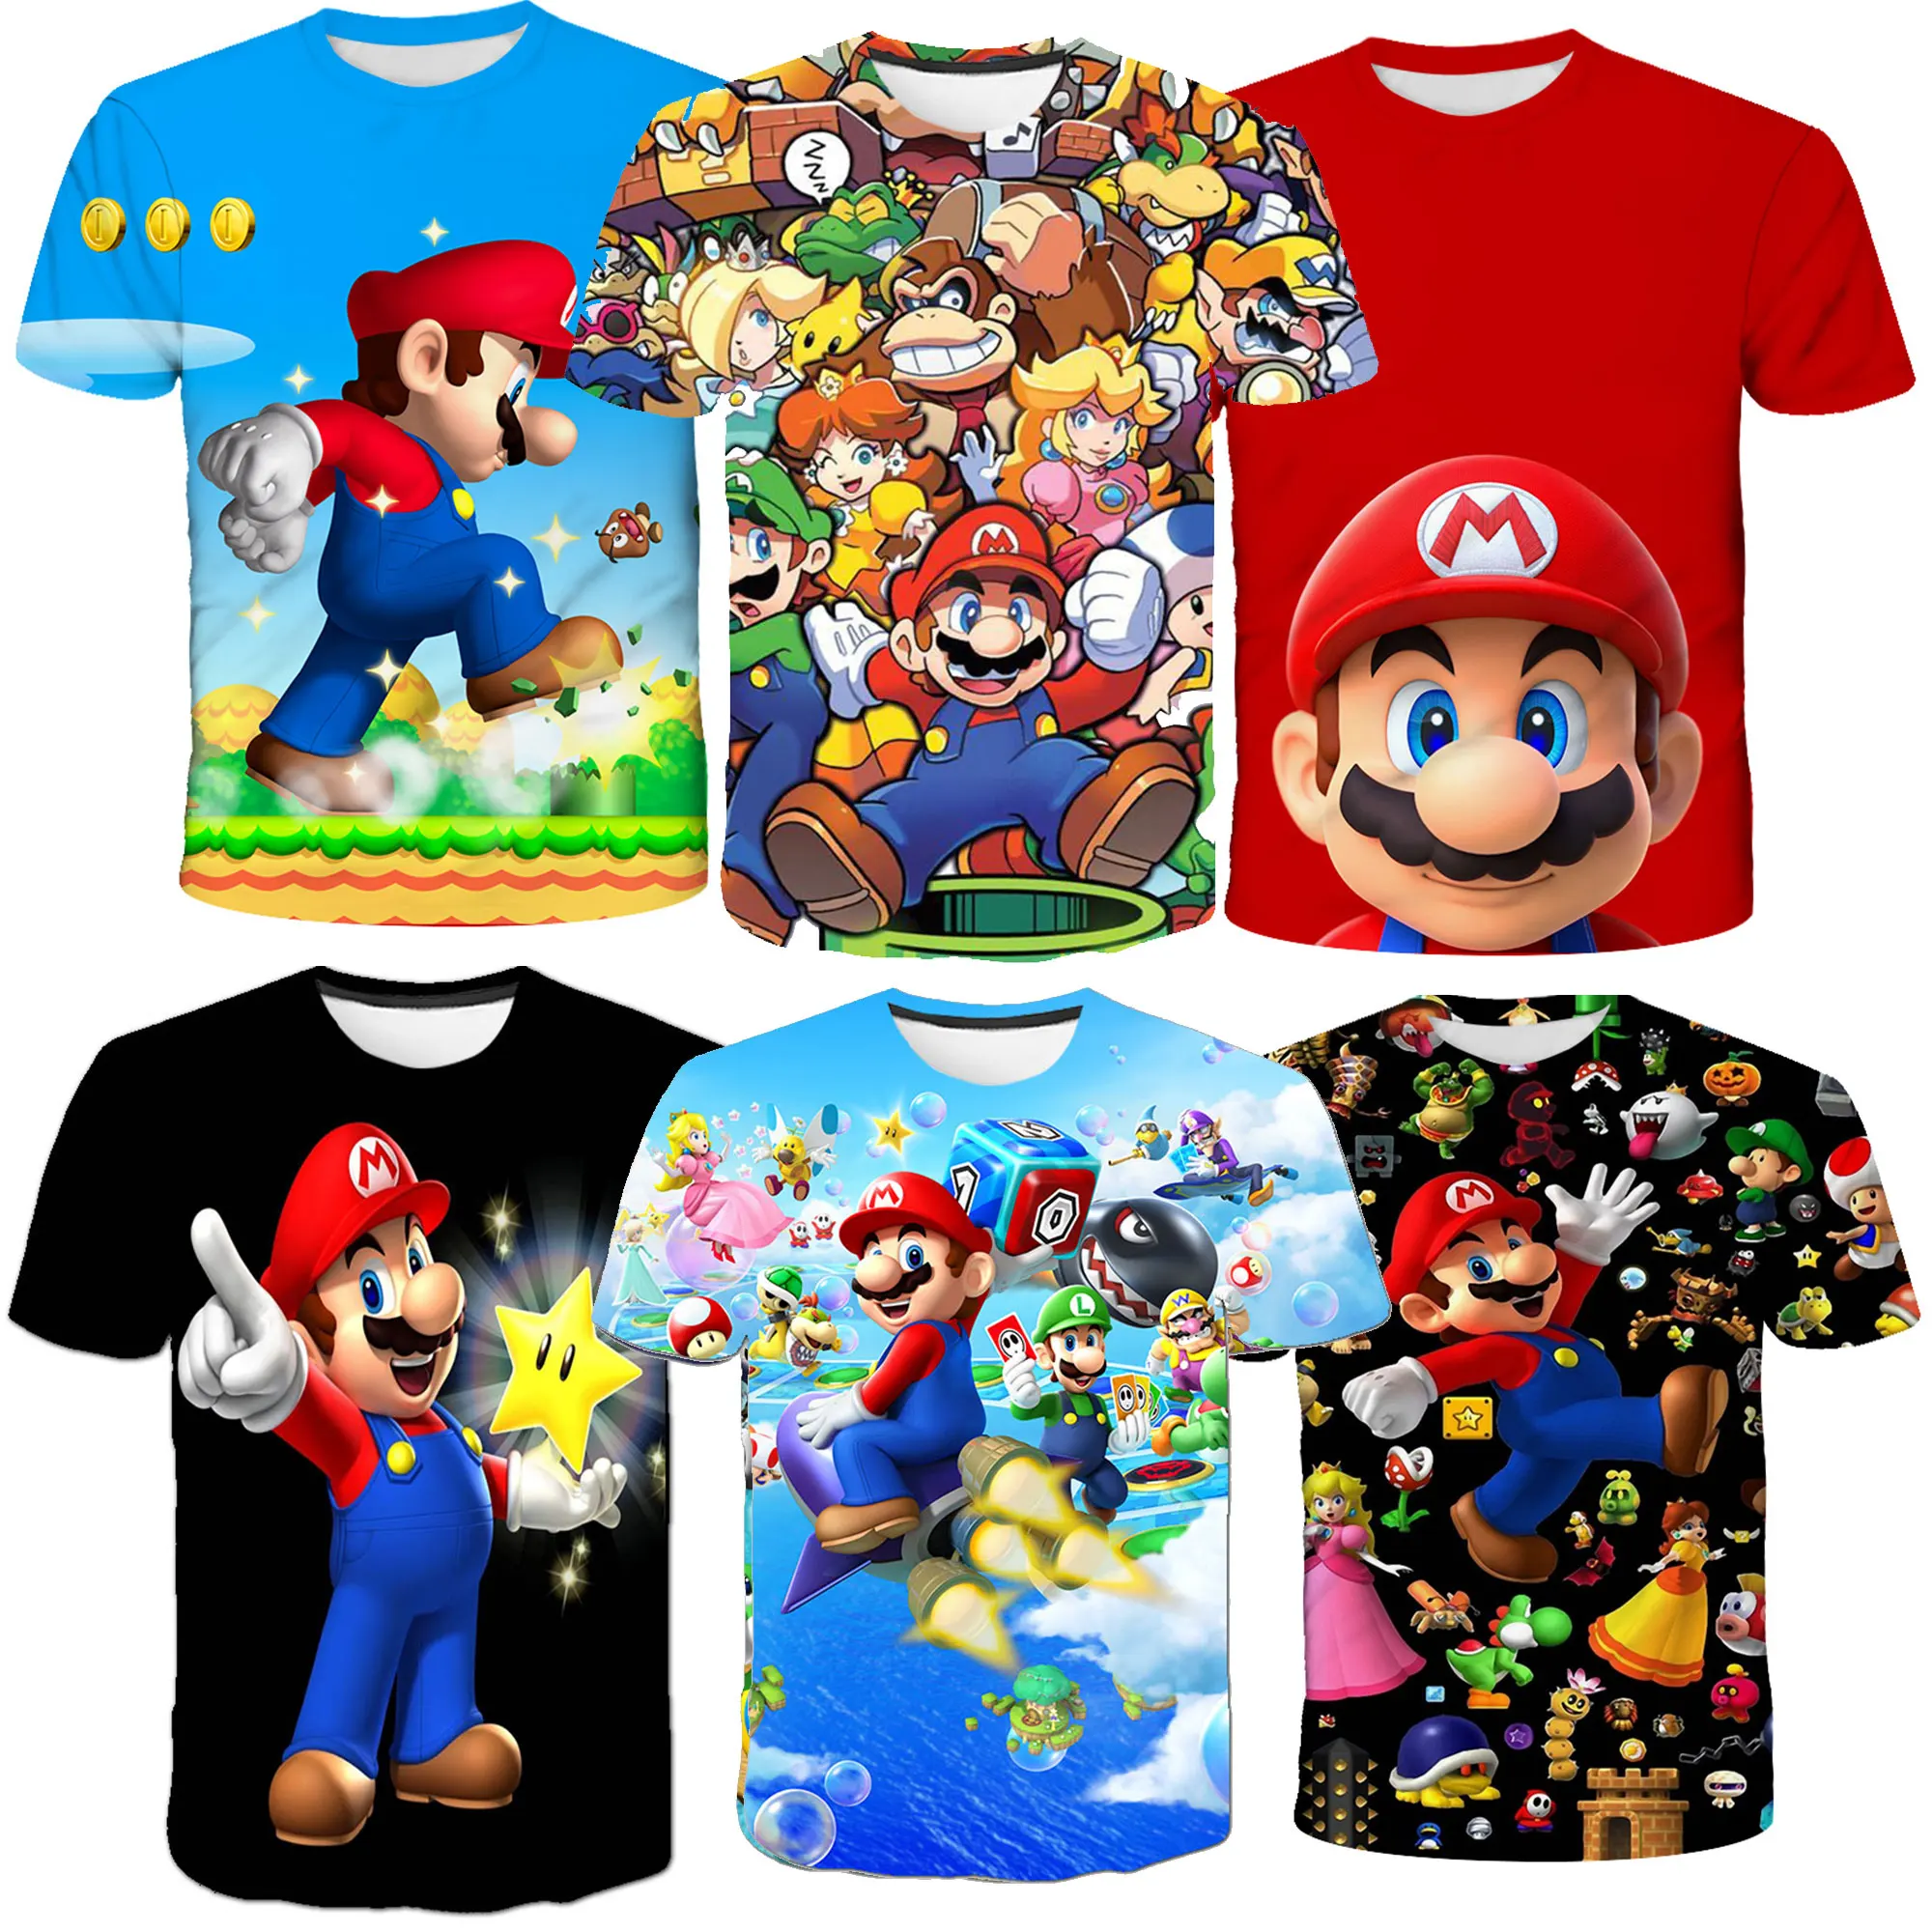 

Super Mario T Shirts Kids Boys Girls T-shirt Baby Cartoon Tops Tees Summer Short Sleeve Super Mario Bros T-shirts 3 to 14 Ys Kid